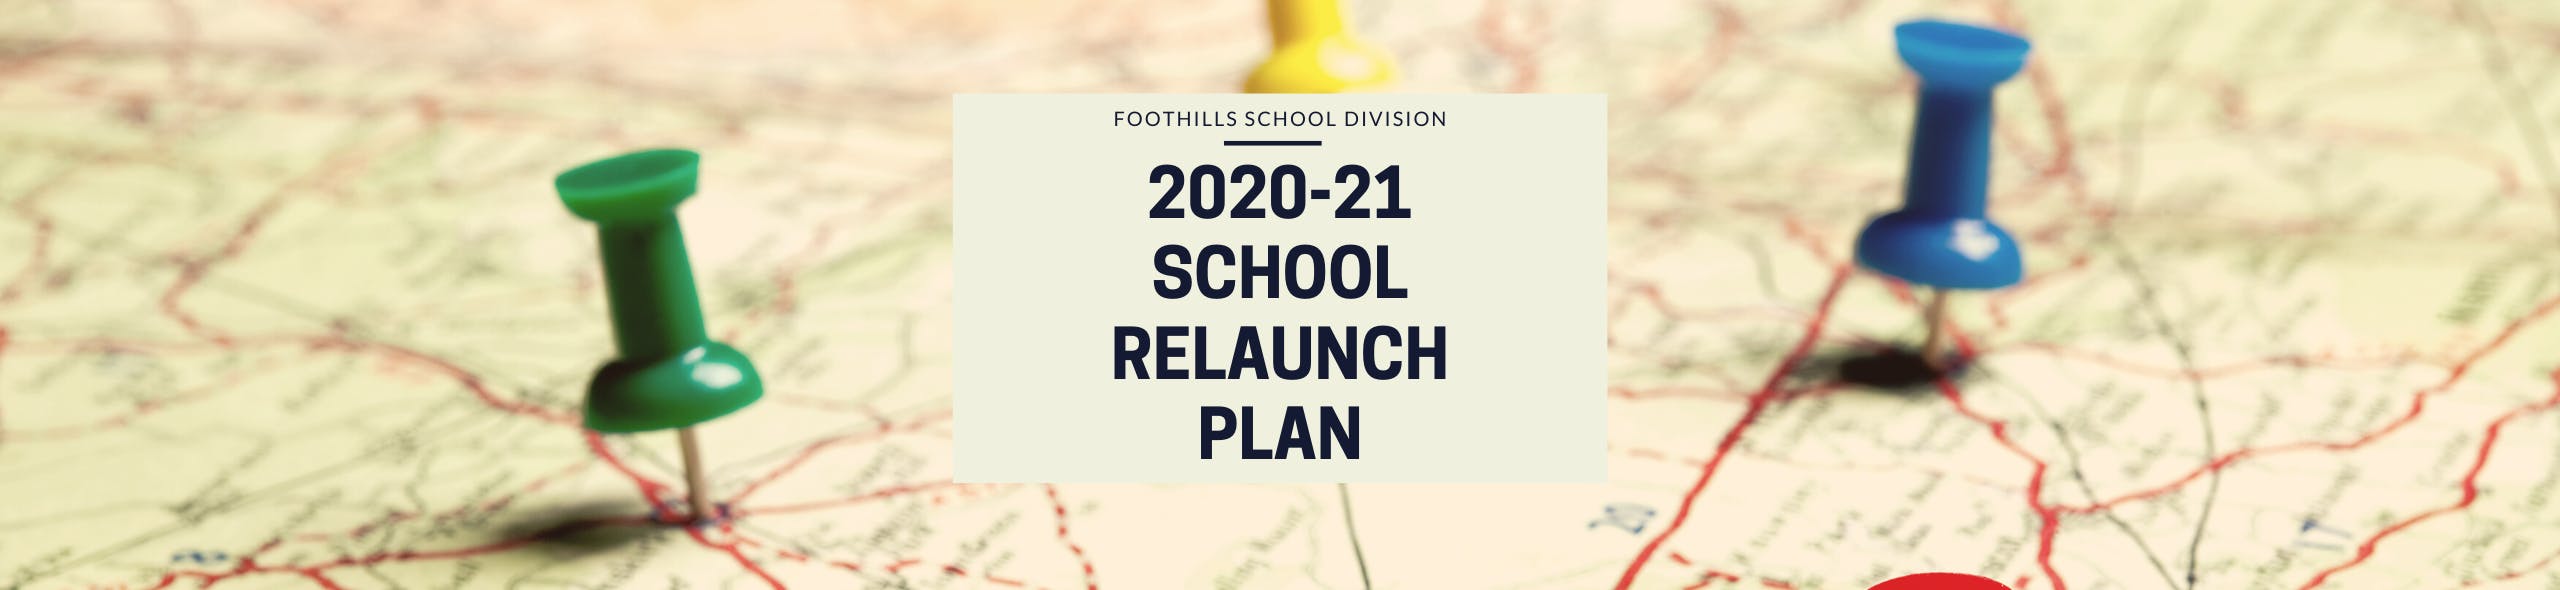 2020-21 School Relaunch Plan